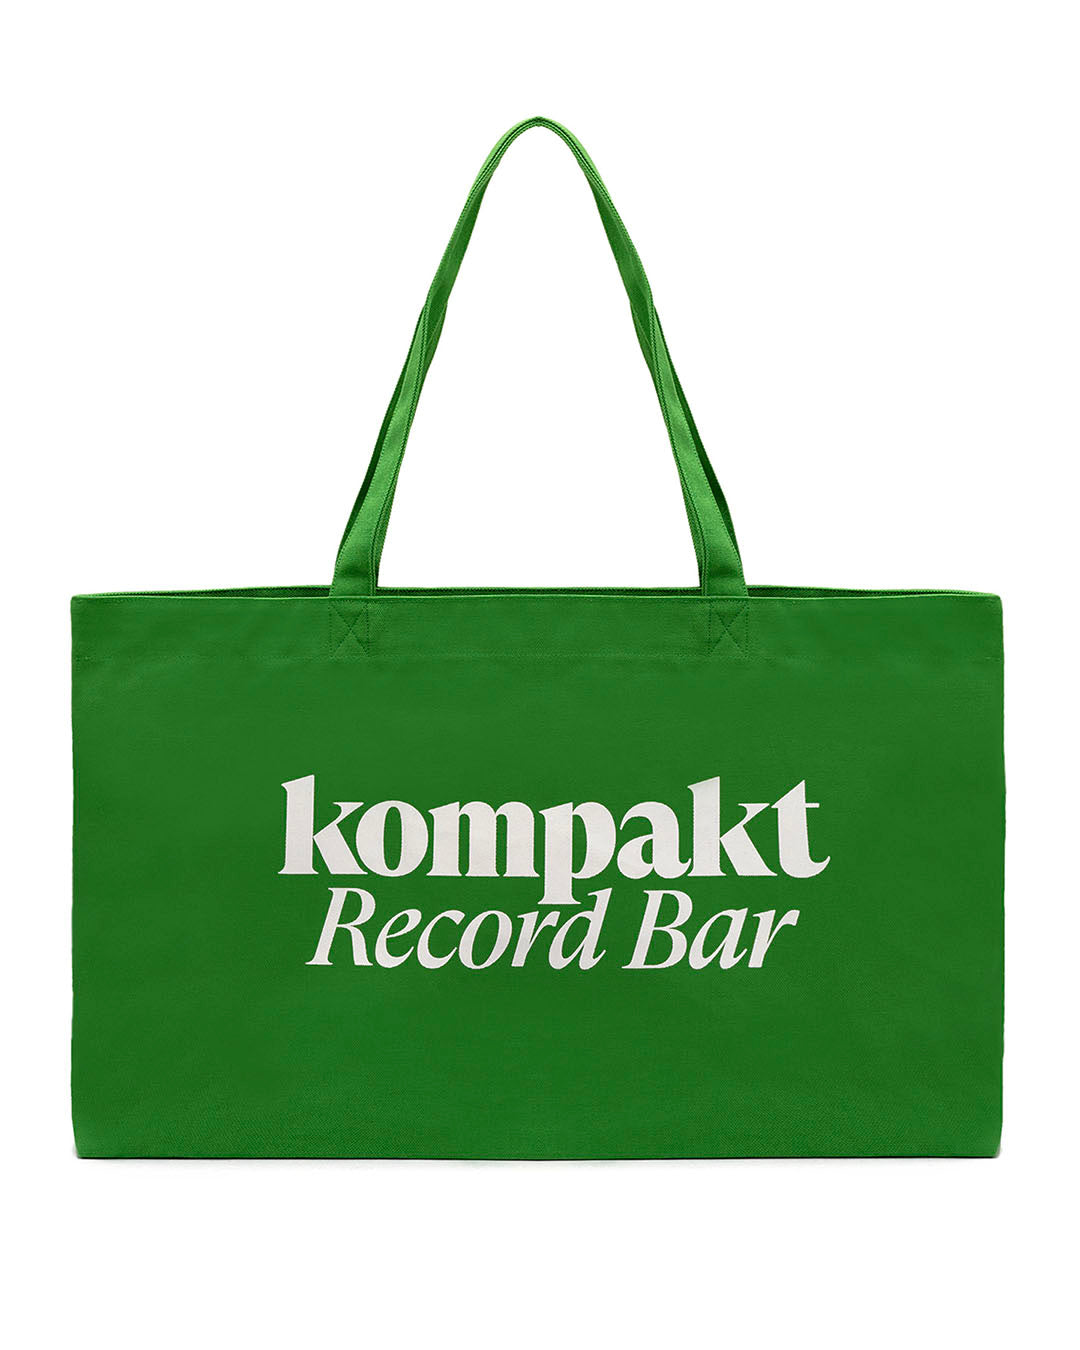 【KOMPAKT RECORD BAR】KRB LOGO TOTE BAG - GREEN